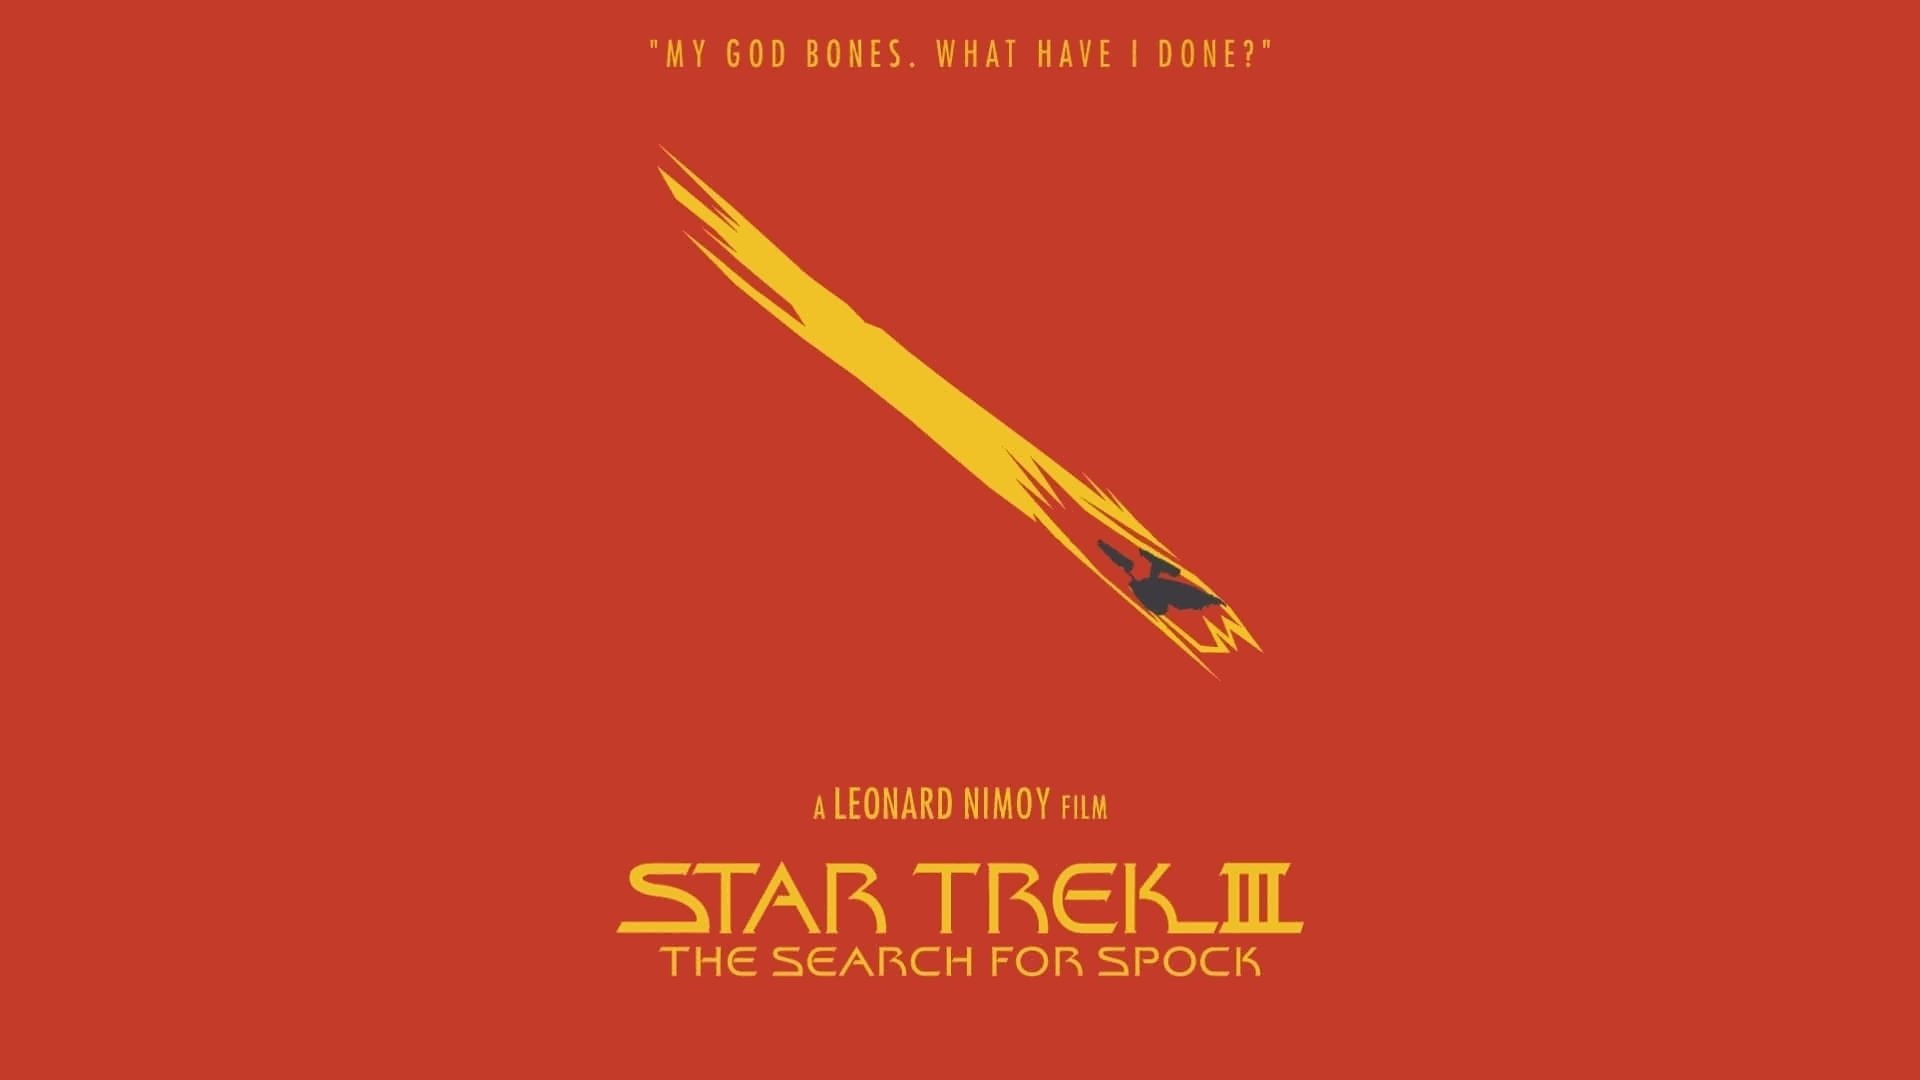 Star Trek, Star Trek III: The Search for Spock, text, western script